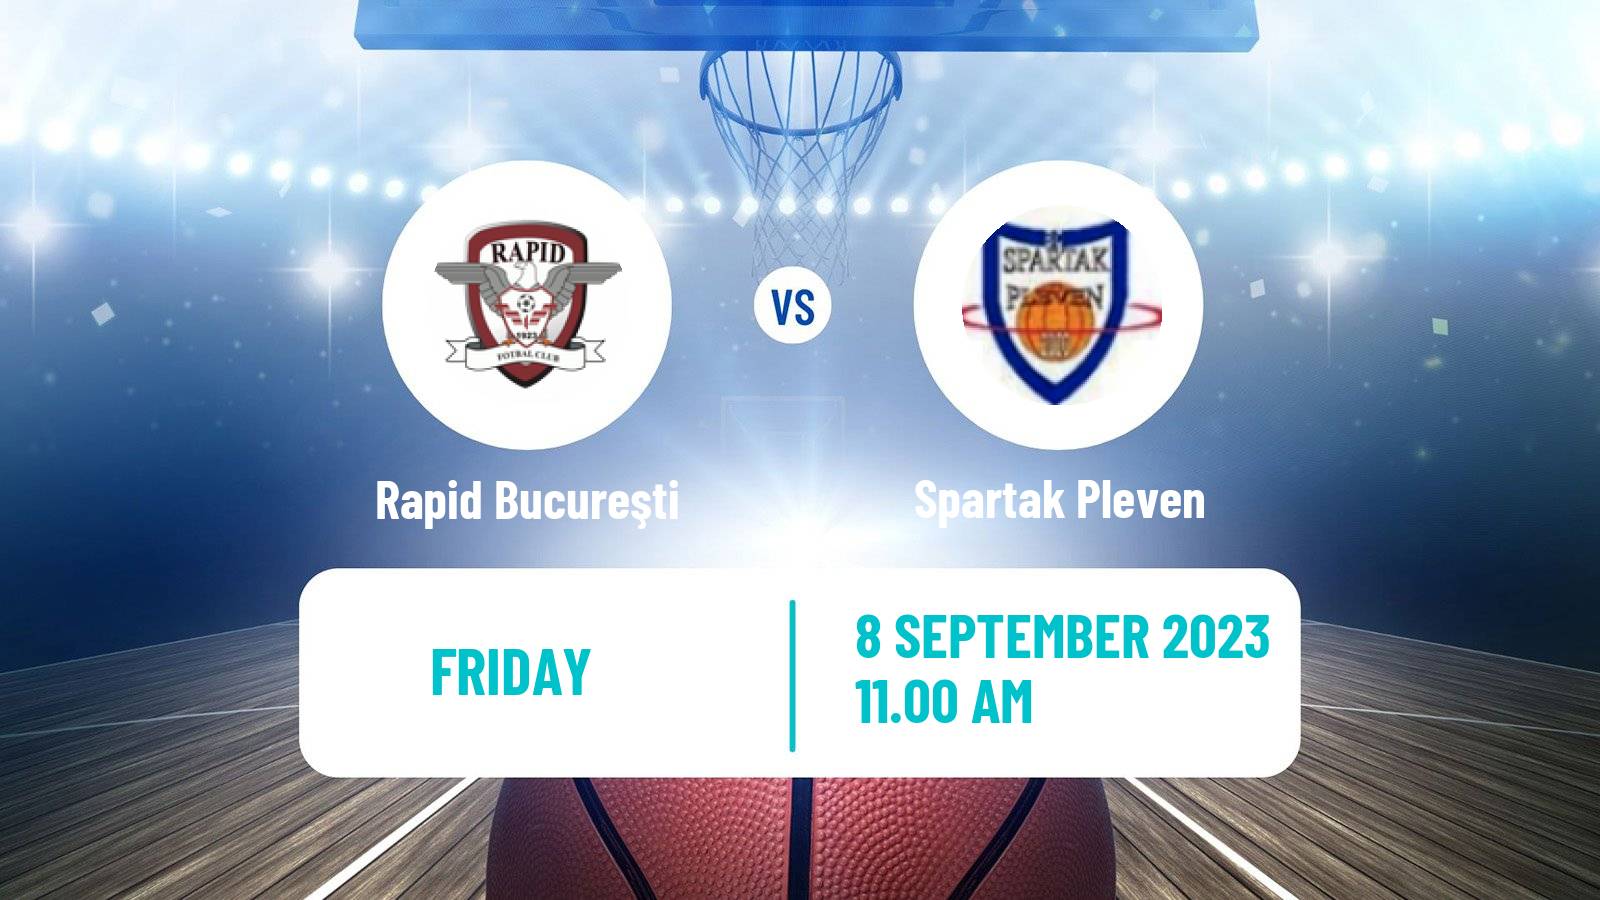 Basketball Club Friendly Basketball Rapid Bucureşti - Spartak Pleven